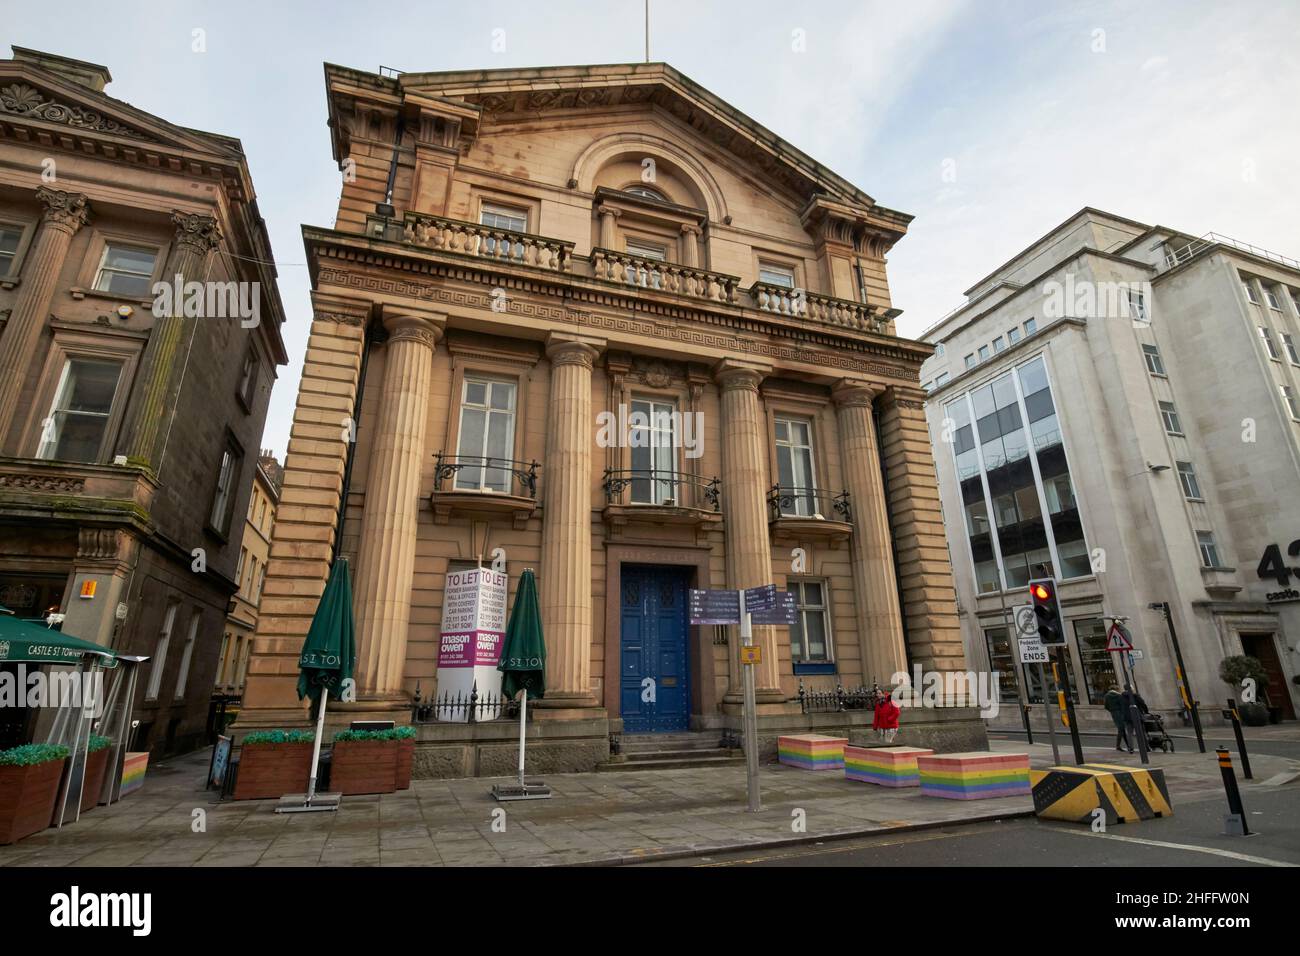 Ancienne banque d'angleterre bâtiment château St Liverpool Angleterre Royaume-Uni Banque D'Images